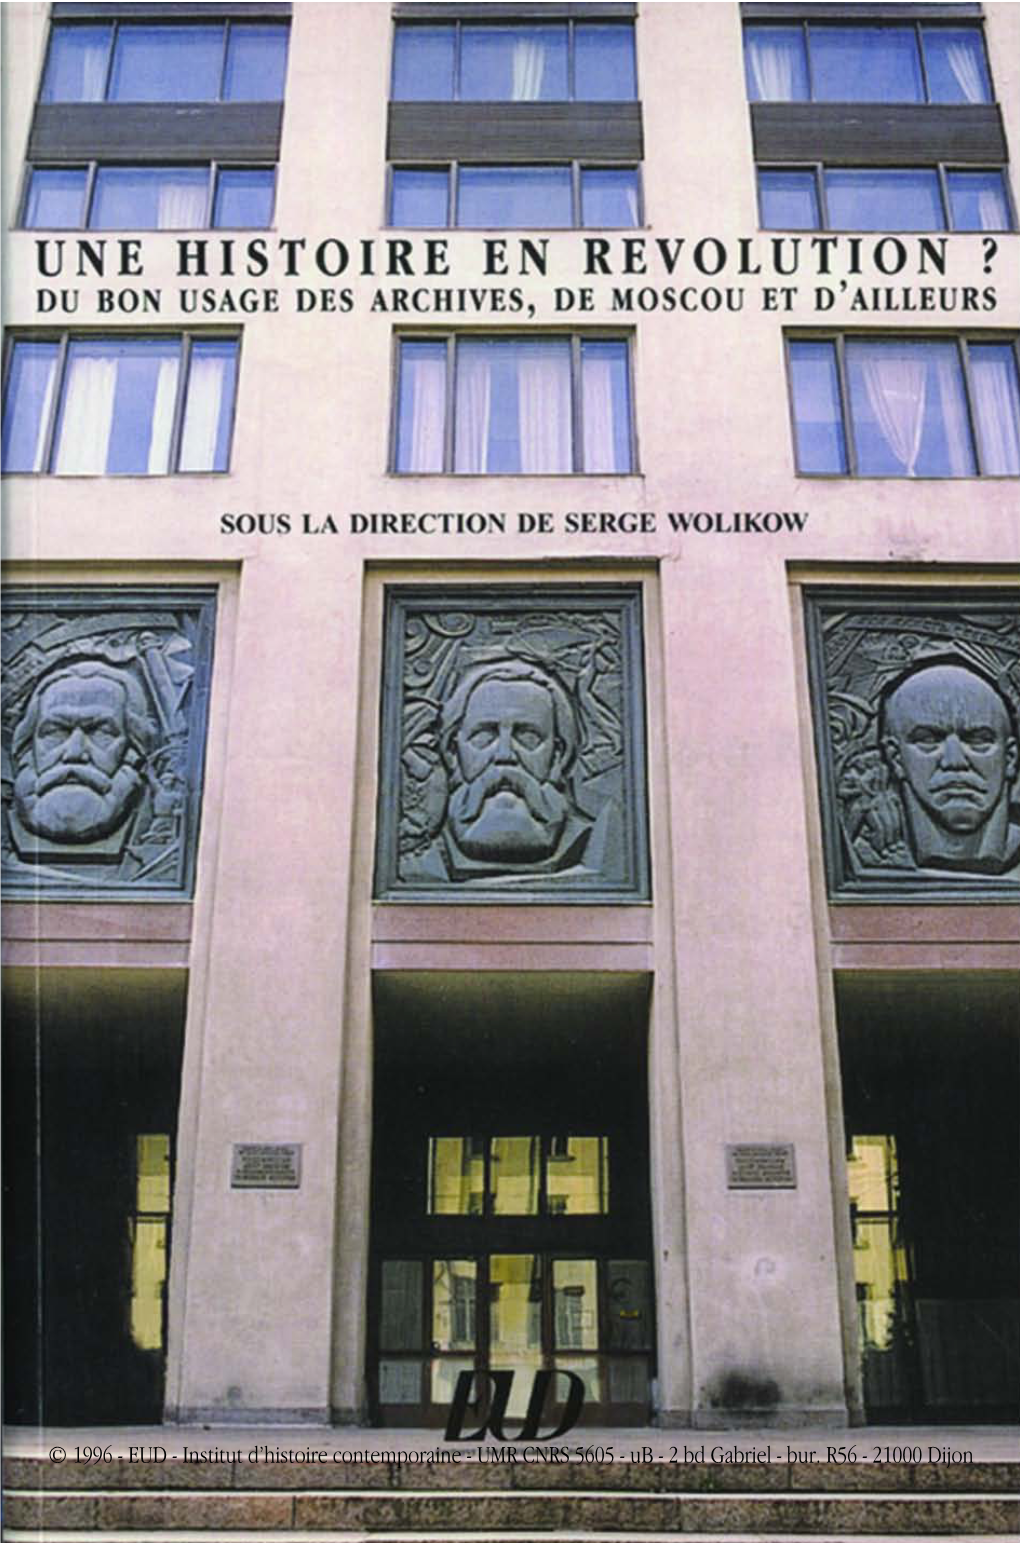 EUD - Institut D’Histoire Contemporaine - UMR CNRS 5605 - Ub - 2 Bd Gabriel - Bur